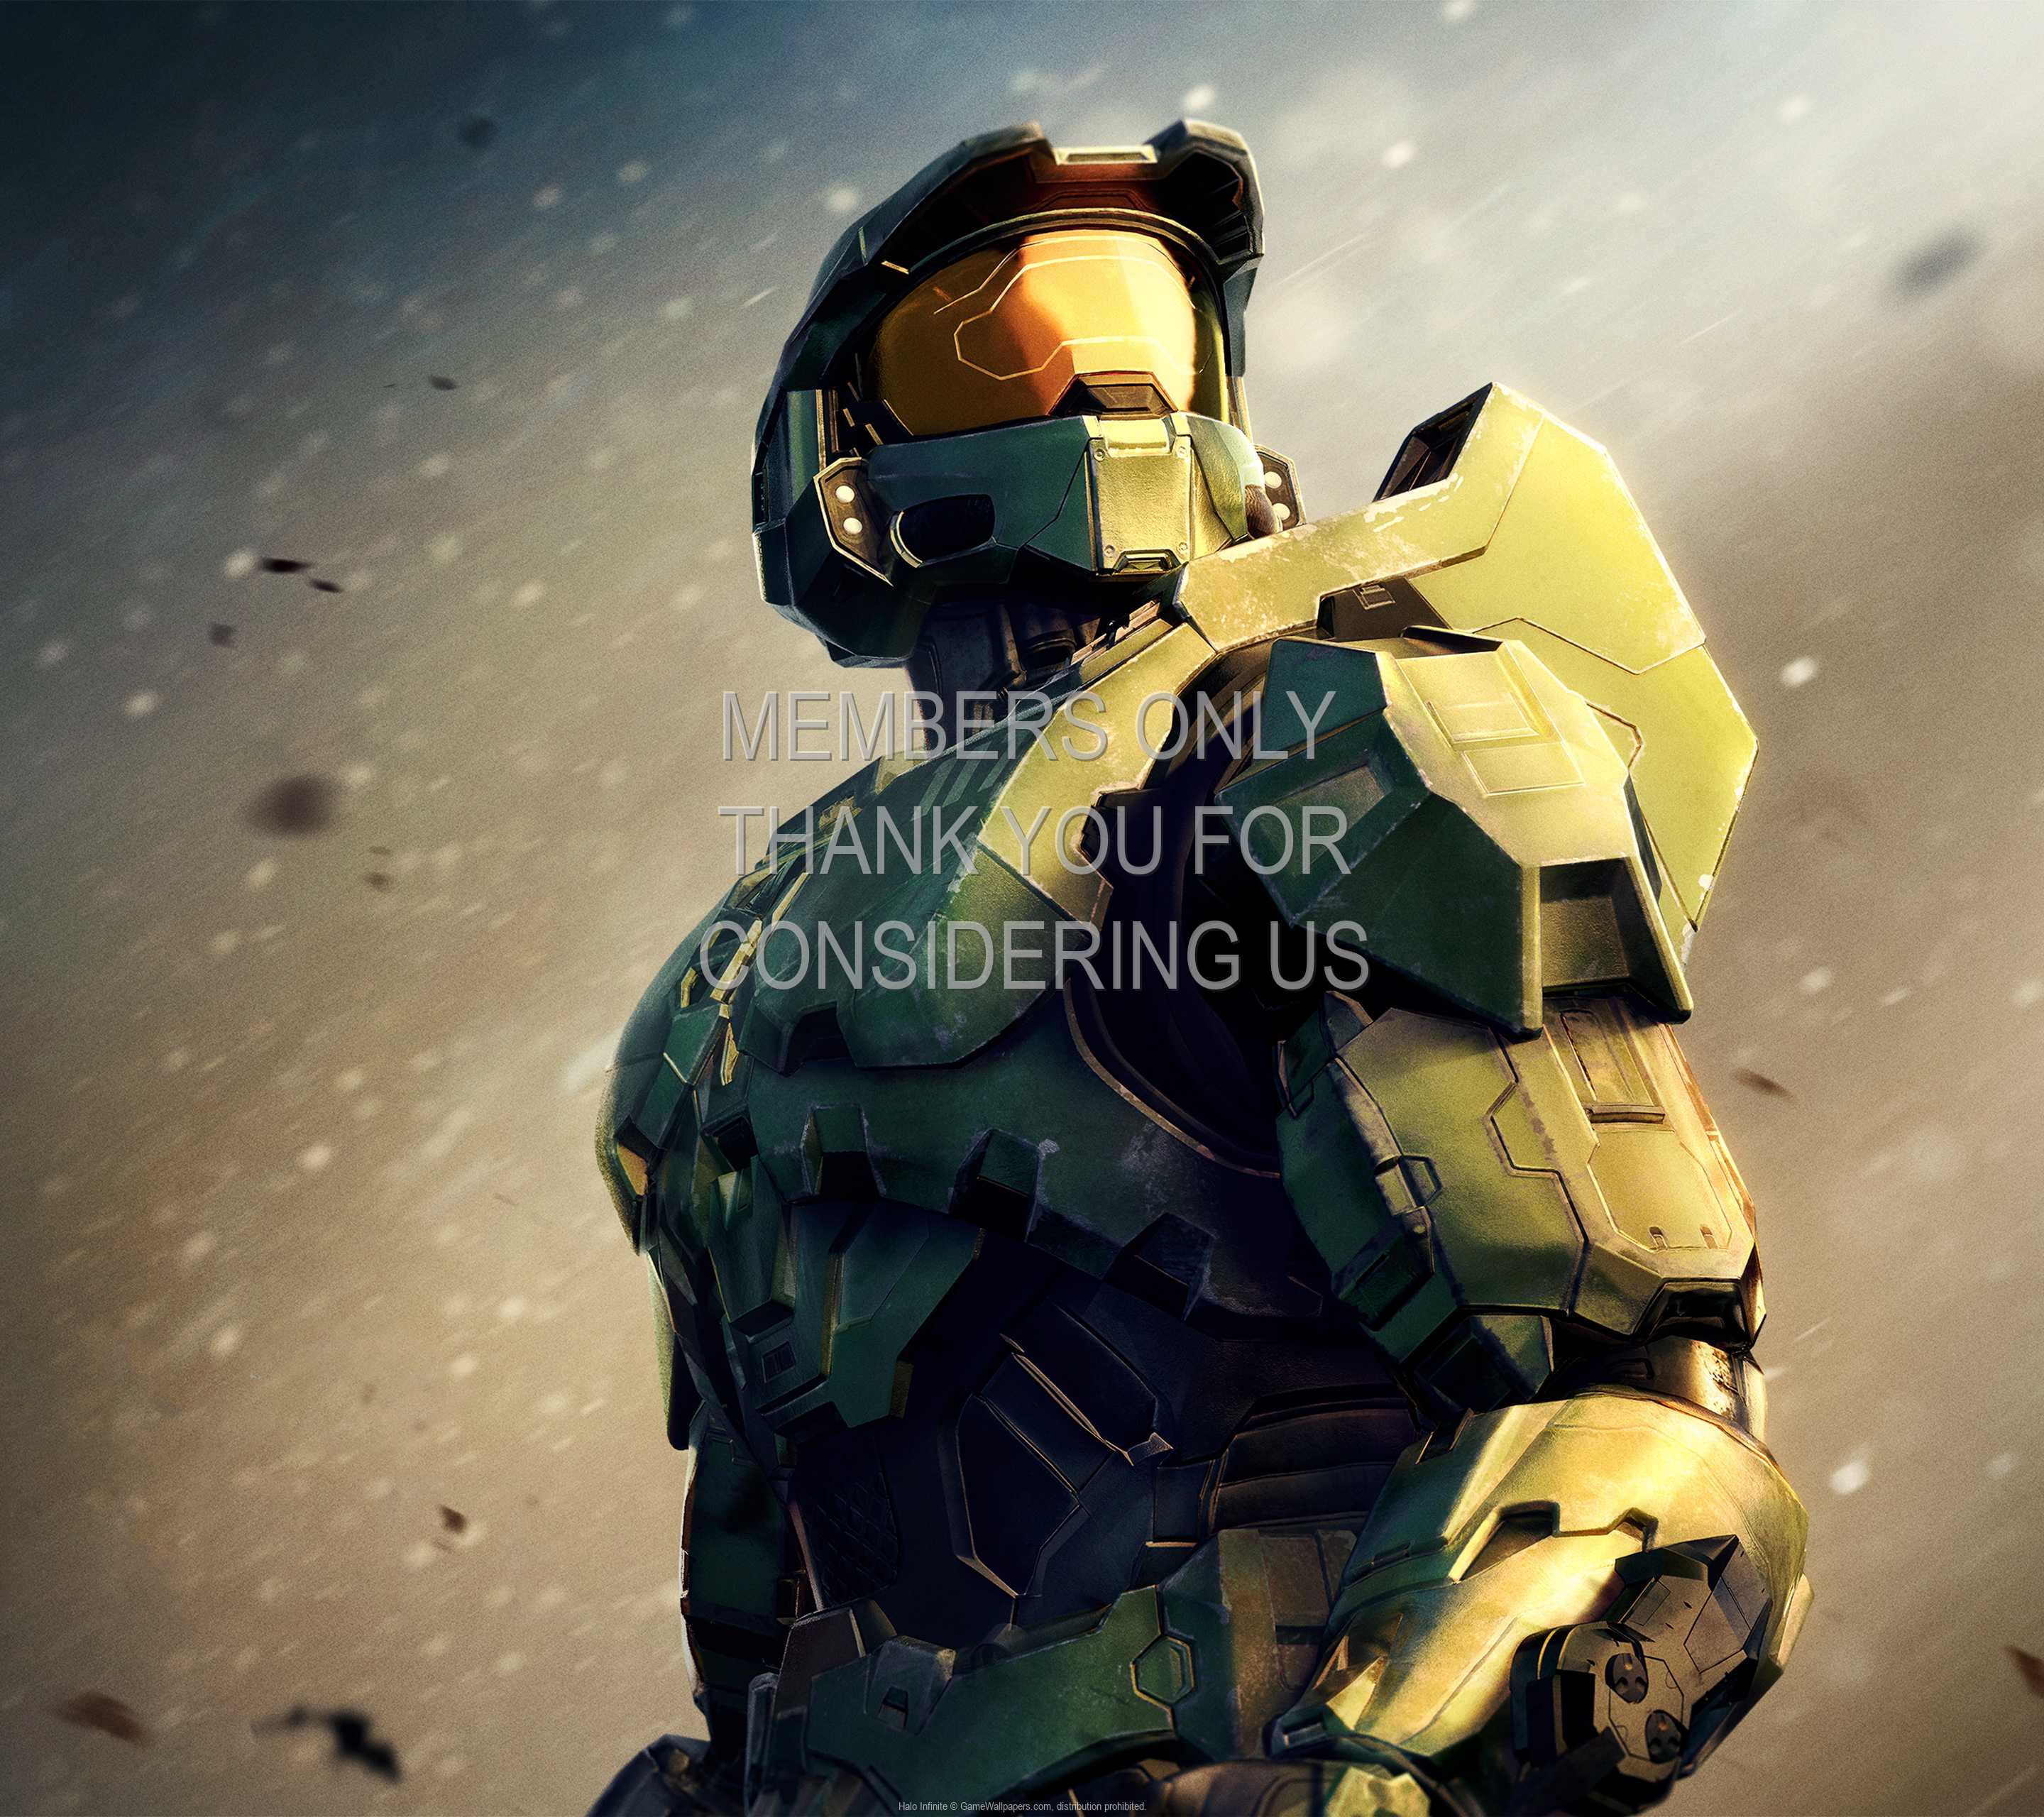 Halo: Infinite 1440p Horizontal Mobile wallpaper or background 19